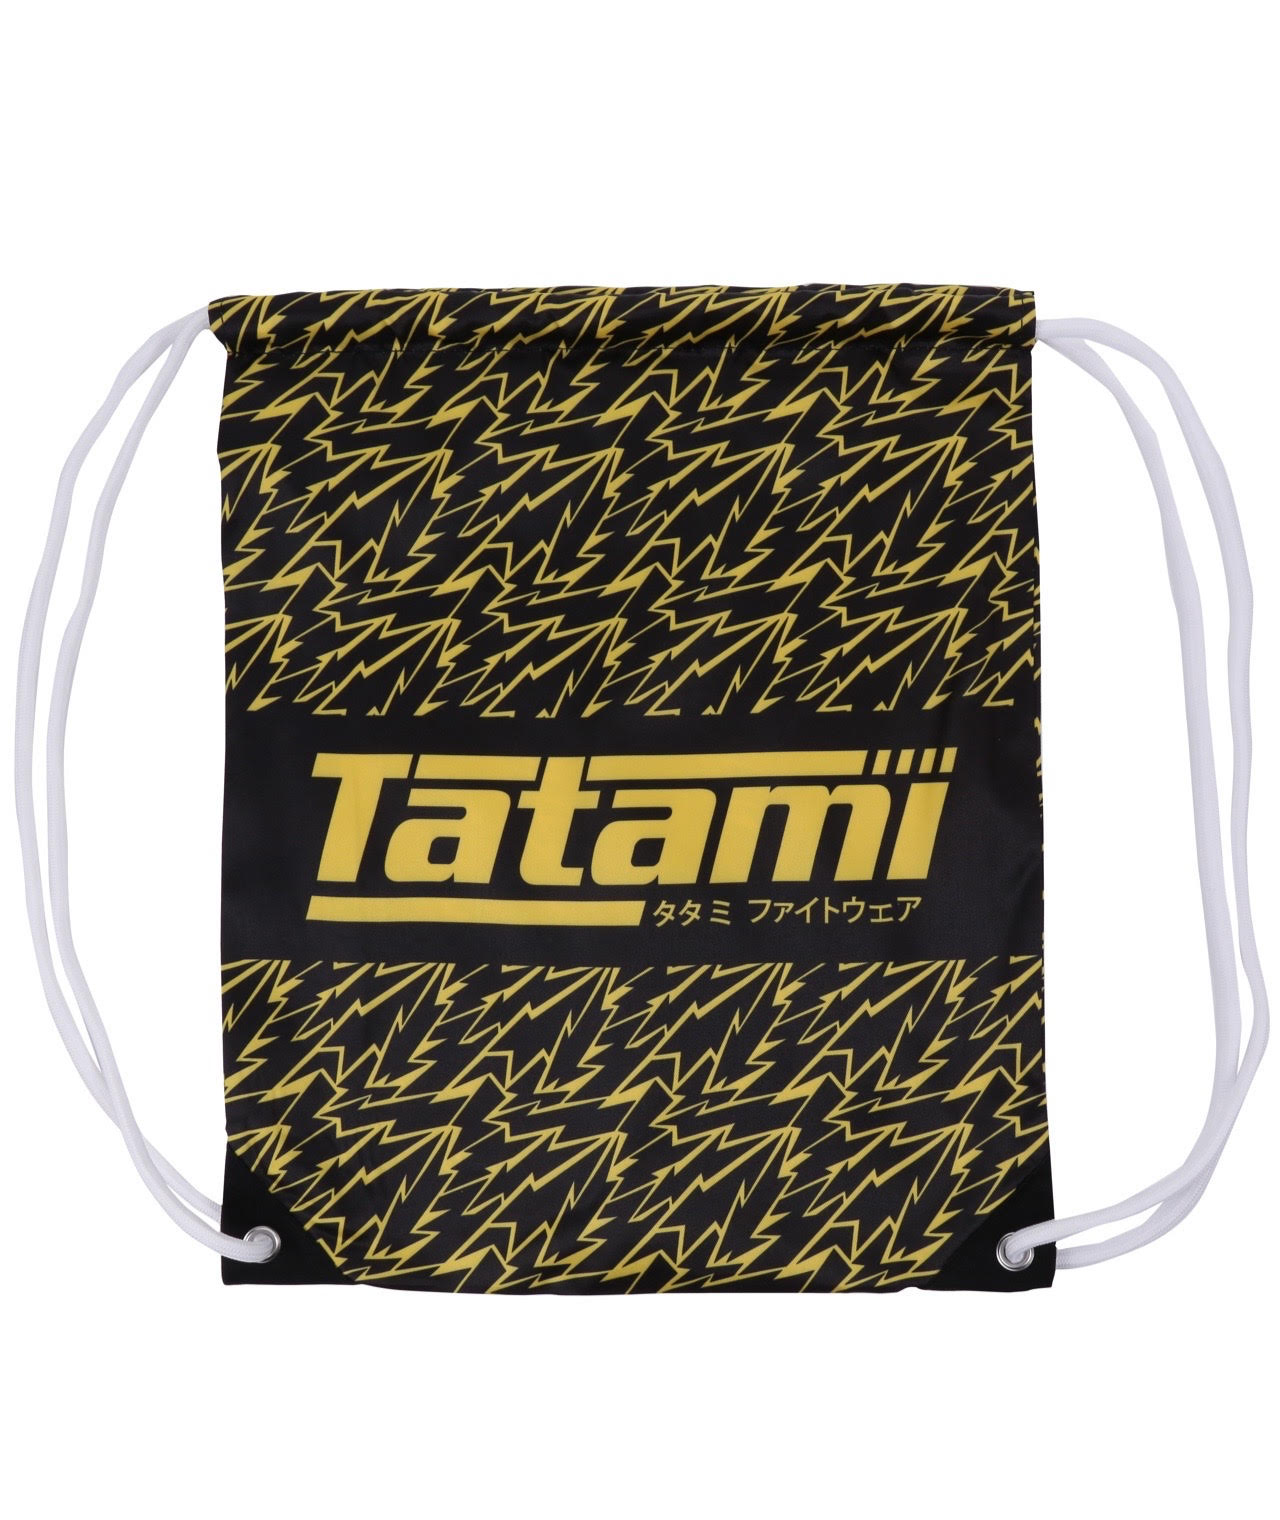 Tatami Ladies Recharge Gi - Bolt